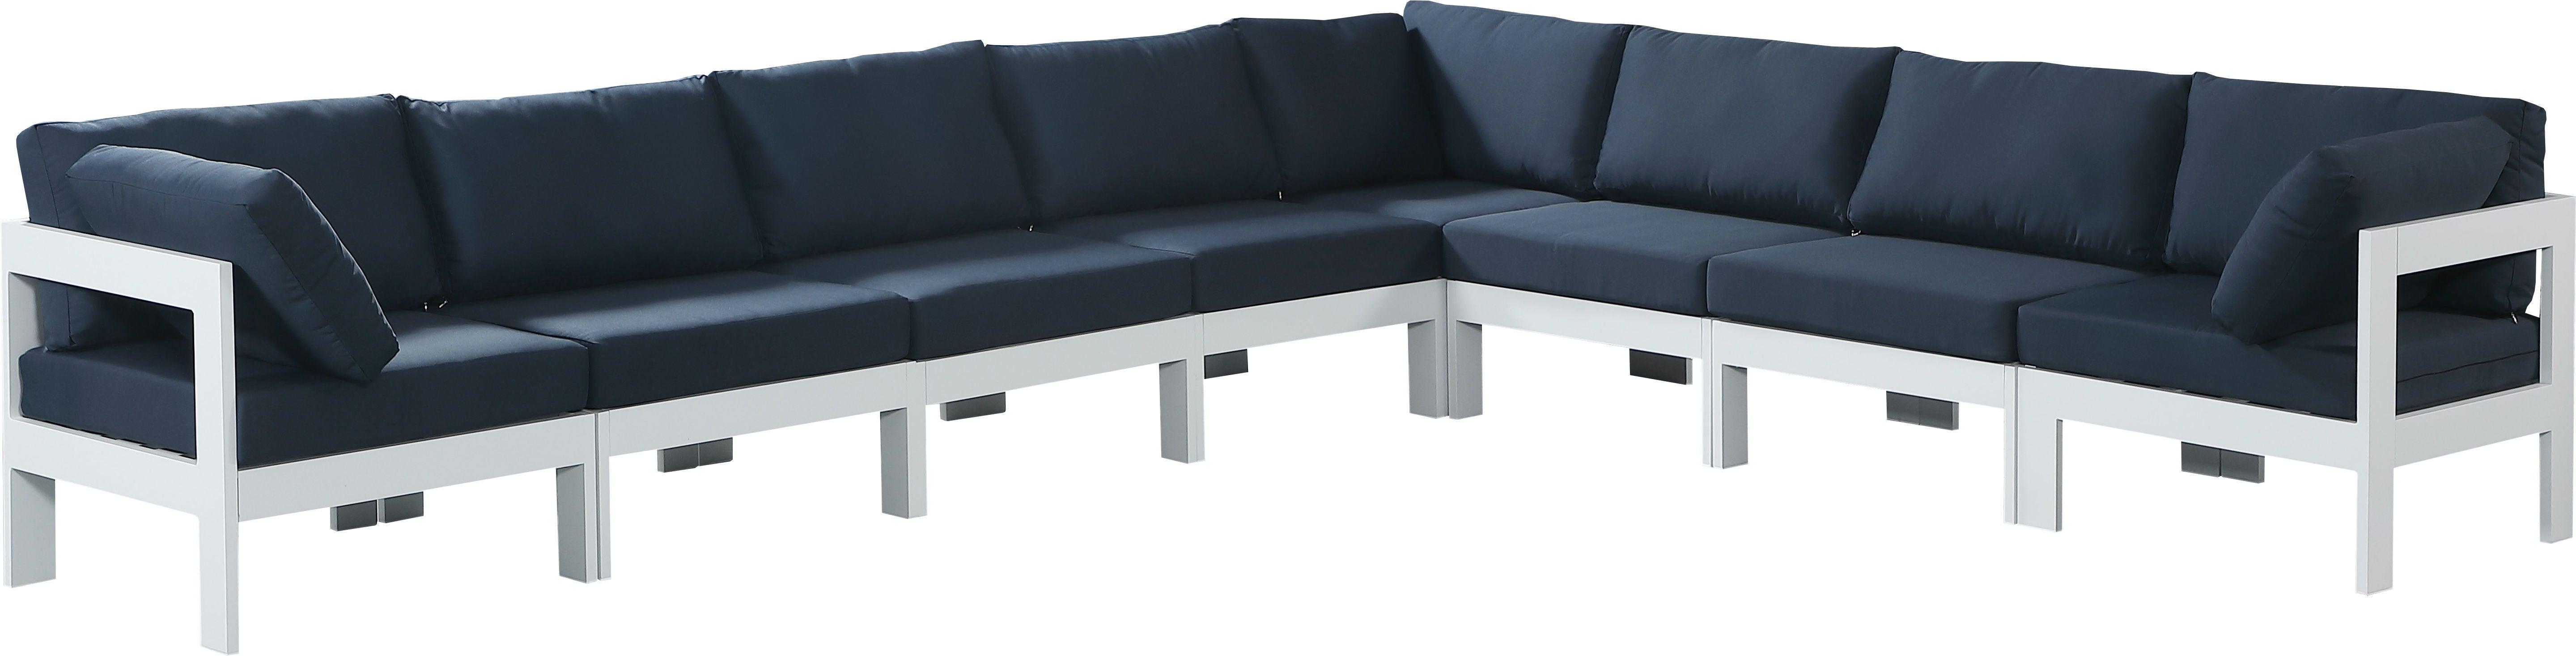 Meridian Furniture - Nizuc - Outdoor Patio Modular Sectional 8 Piece - Navy - Fabric - 5th Avenue Furniture